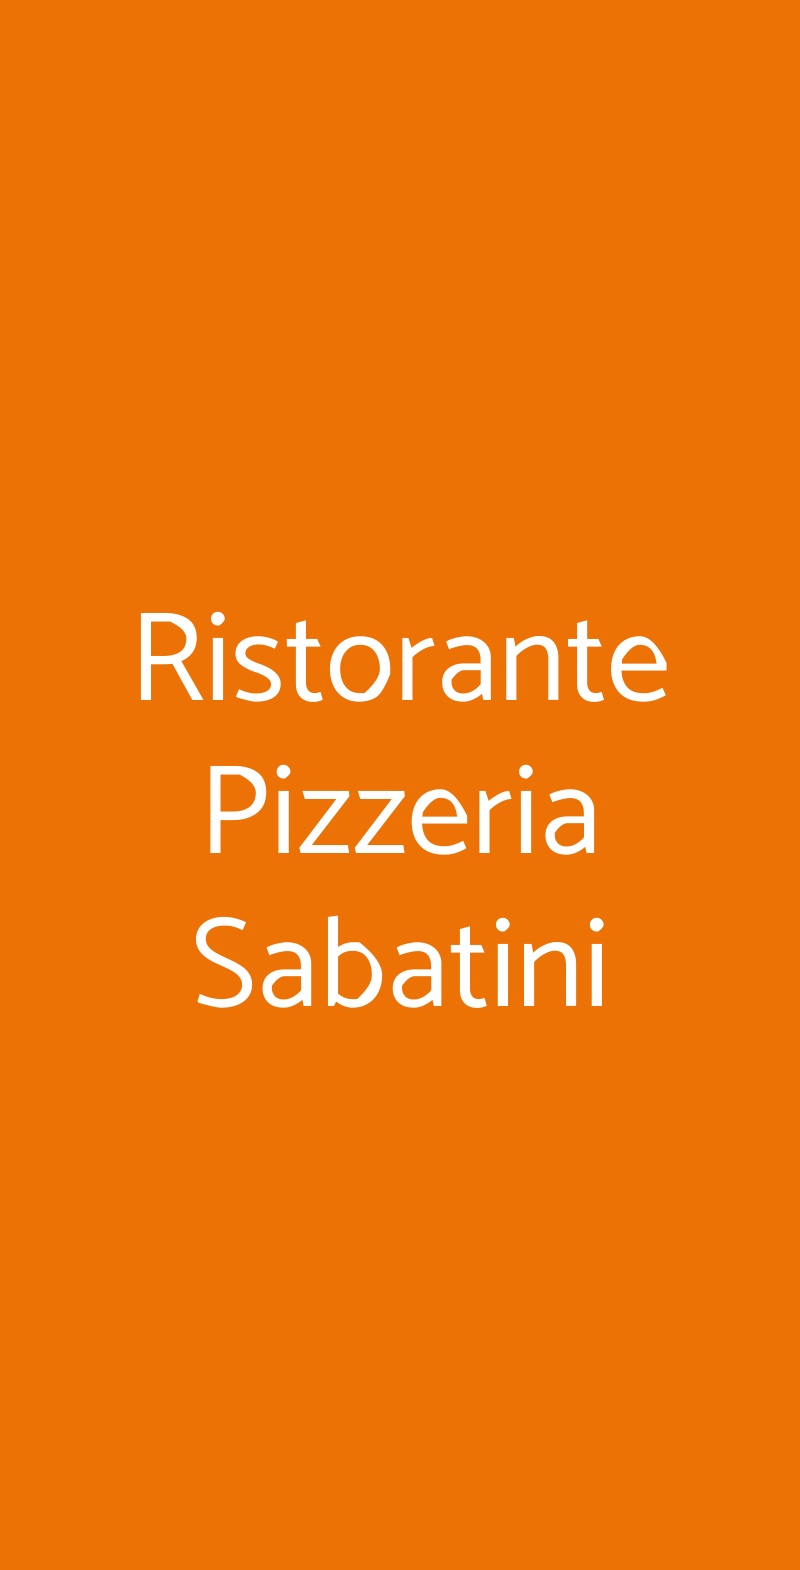 Ristorante Pizzeria Sabatini Milano menù 1 pagina